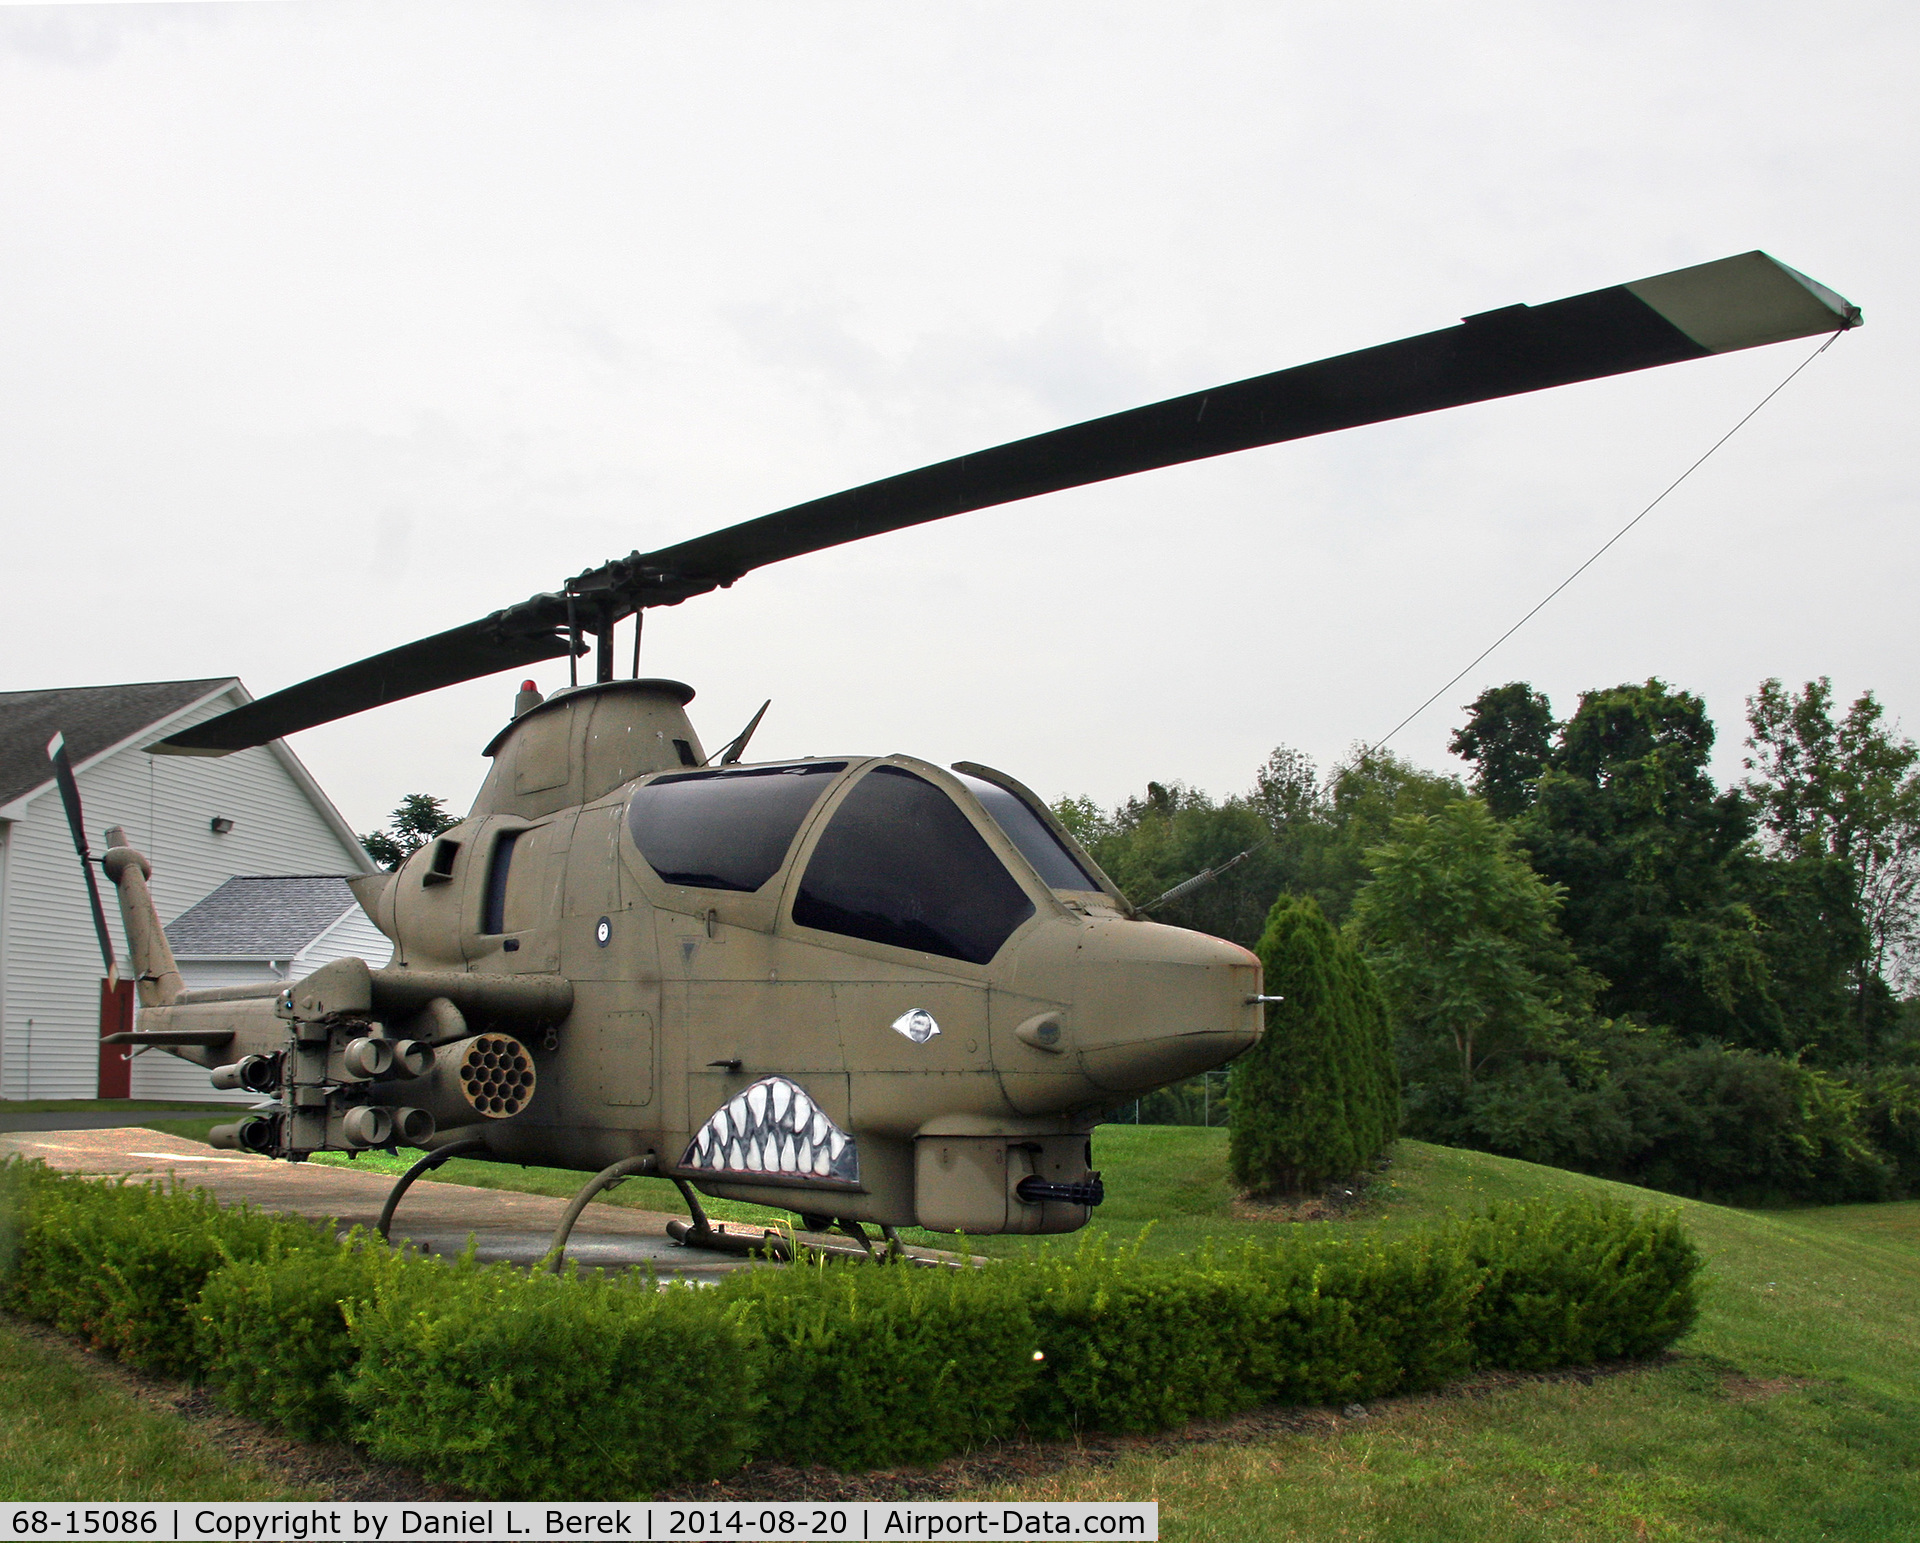 68-15086, 1968 Bell AH-1S Cobra C/N 20620, This Huey is on display as a veterans memorial at a VFW post, Bath, NY.